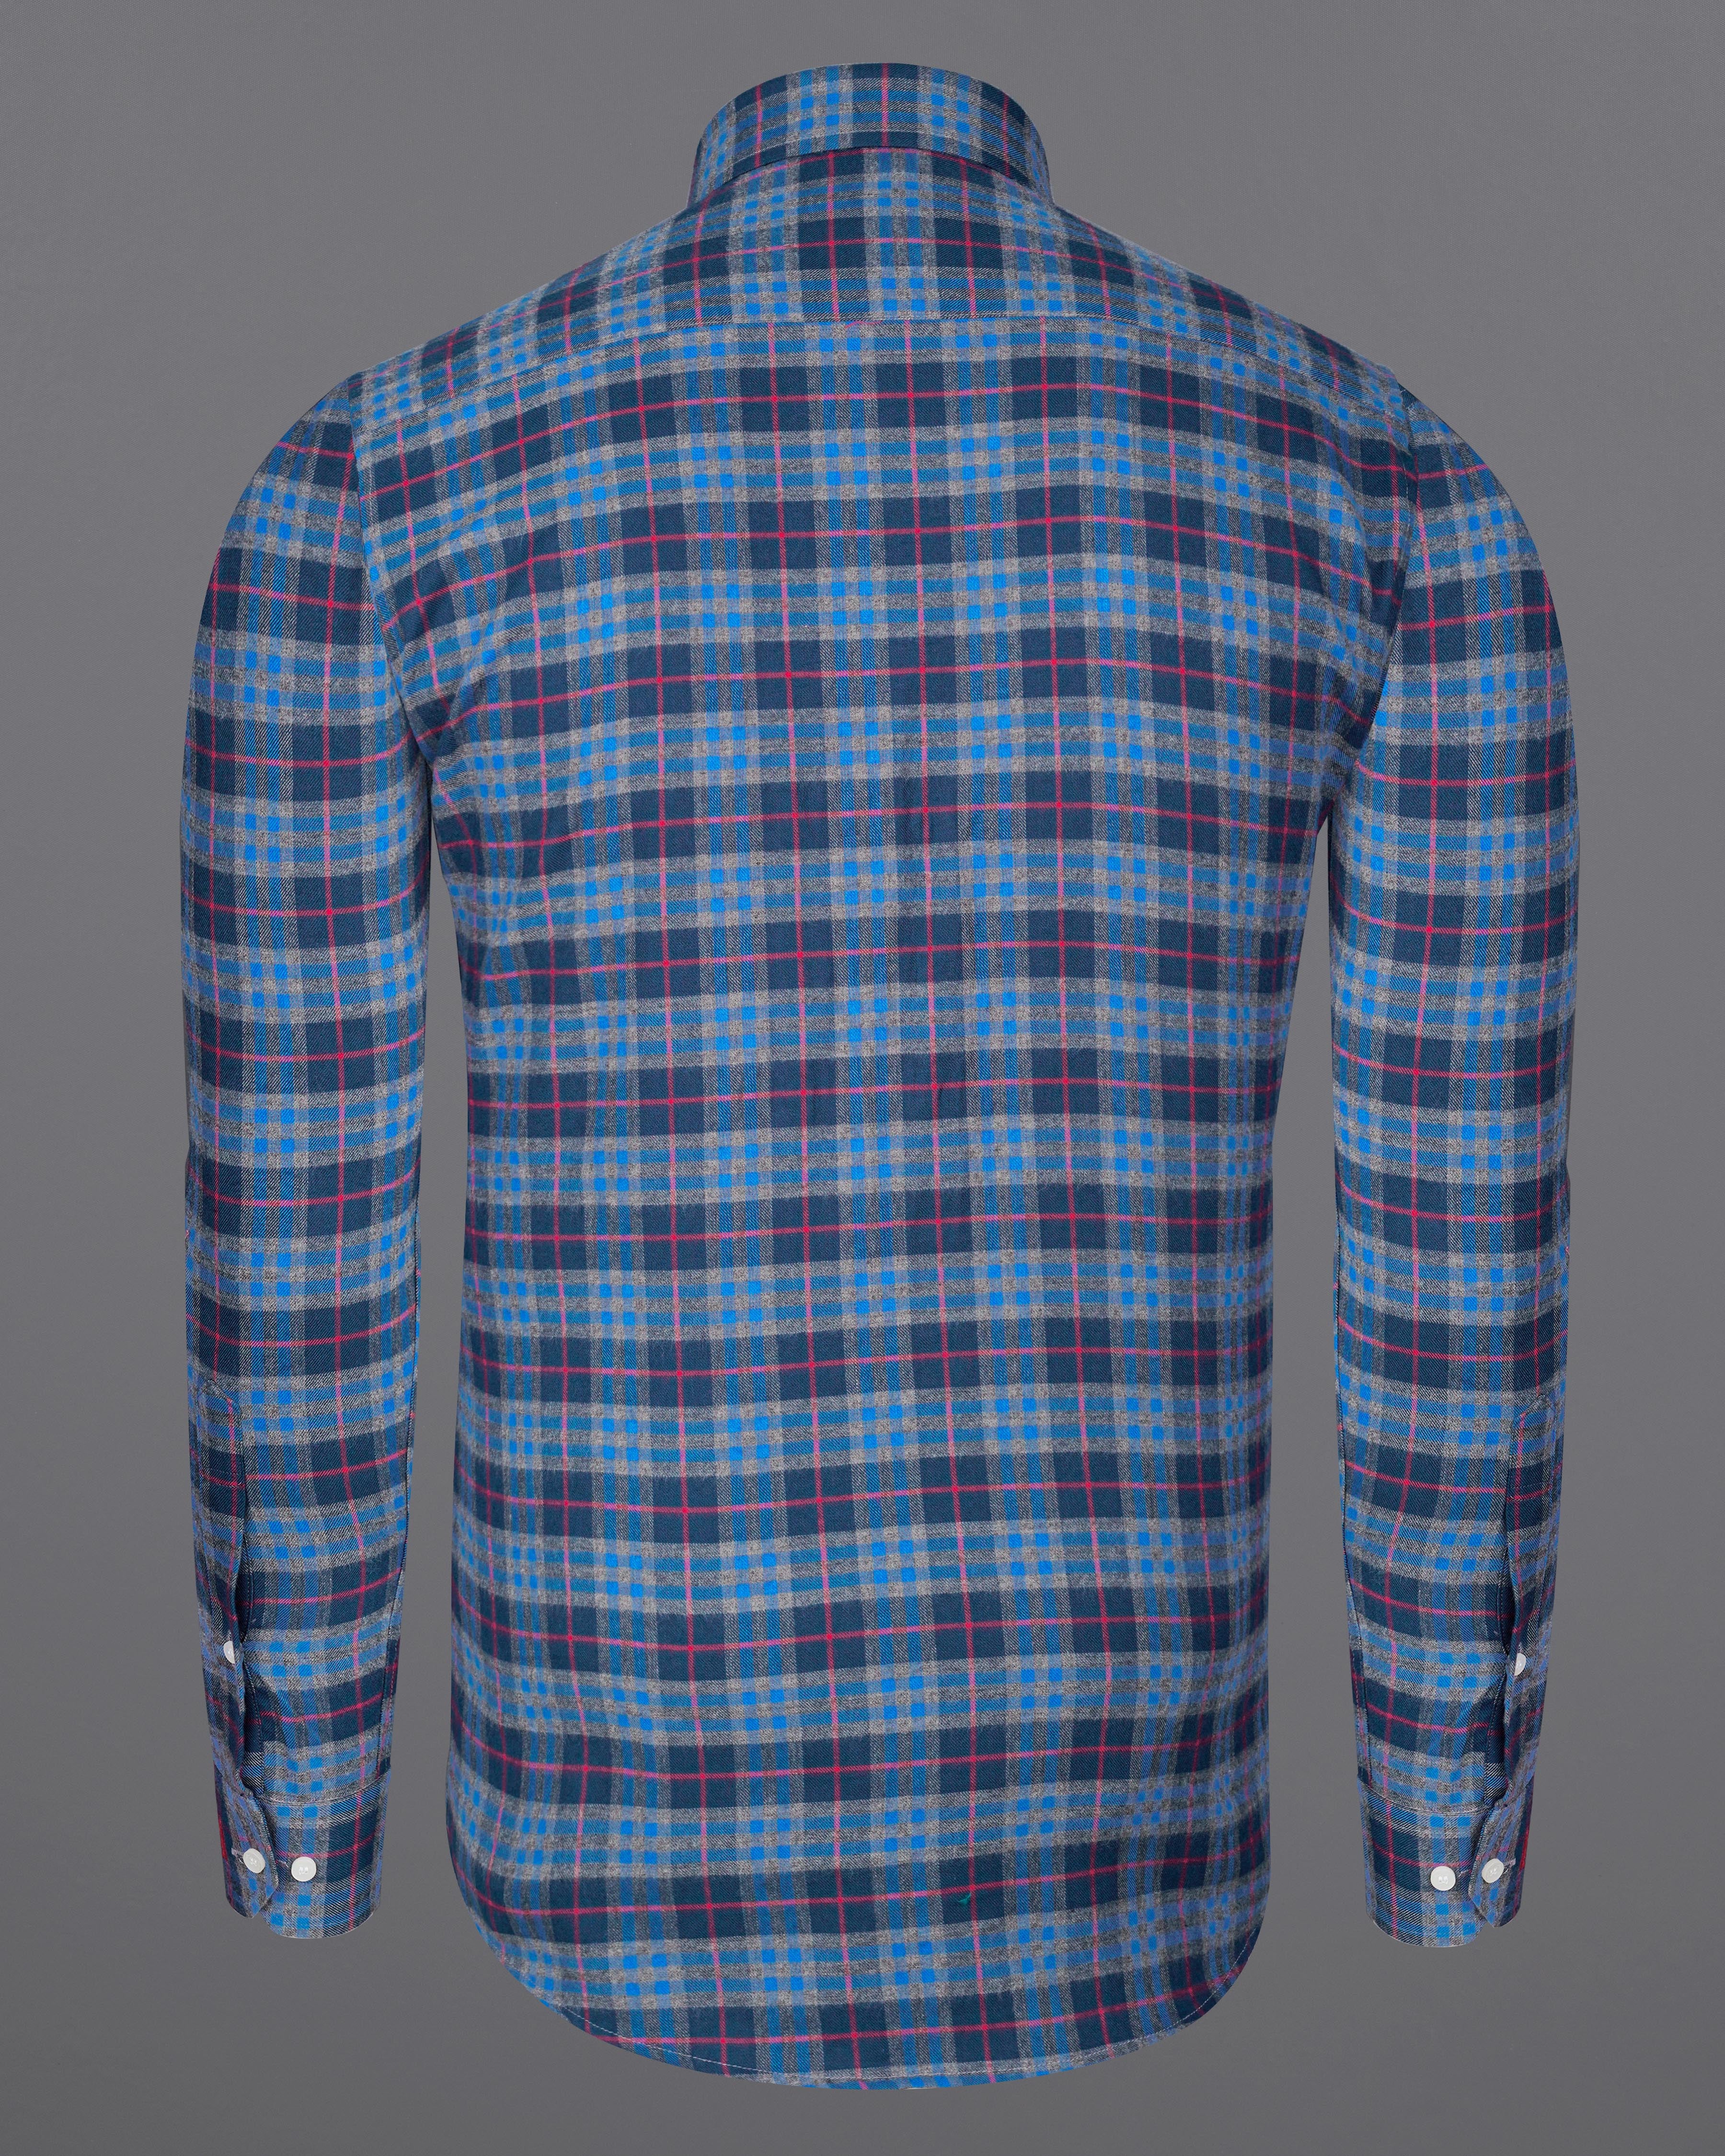 Azure Blue and Regal Blue Plaid Twill Textured Premium Cotton Shirt